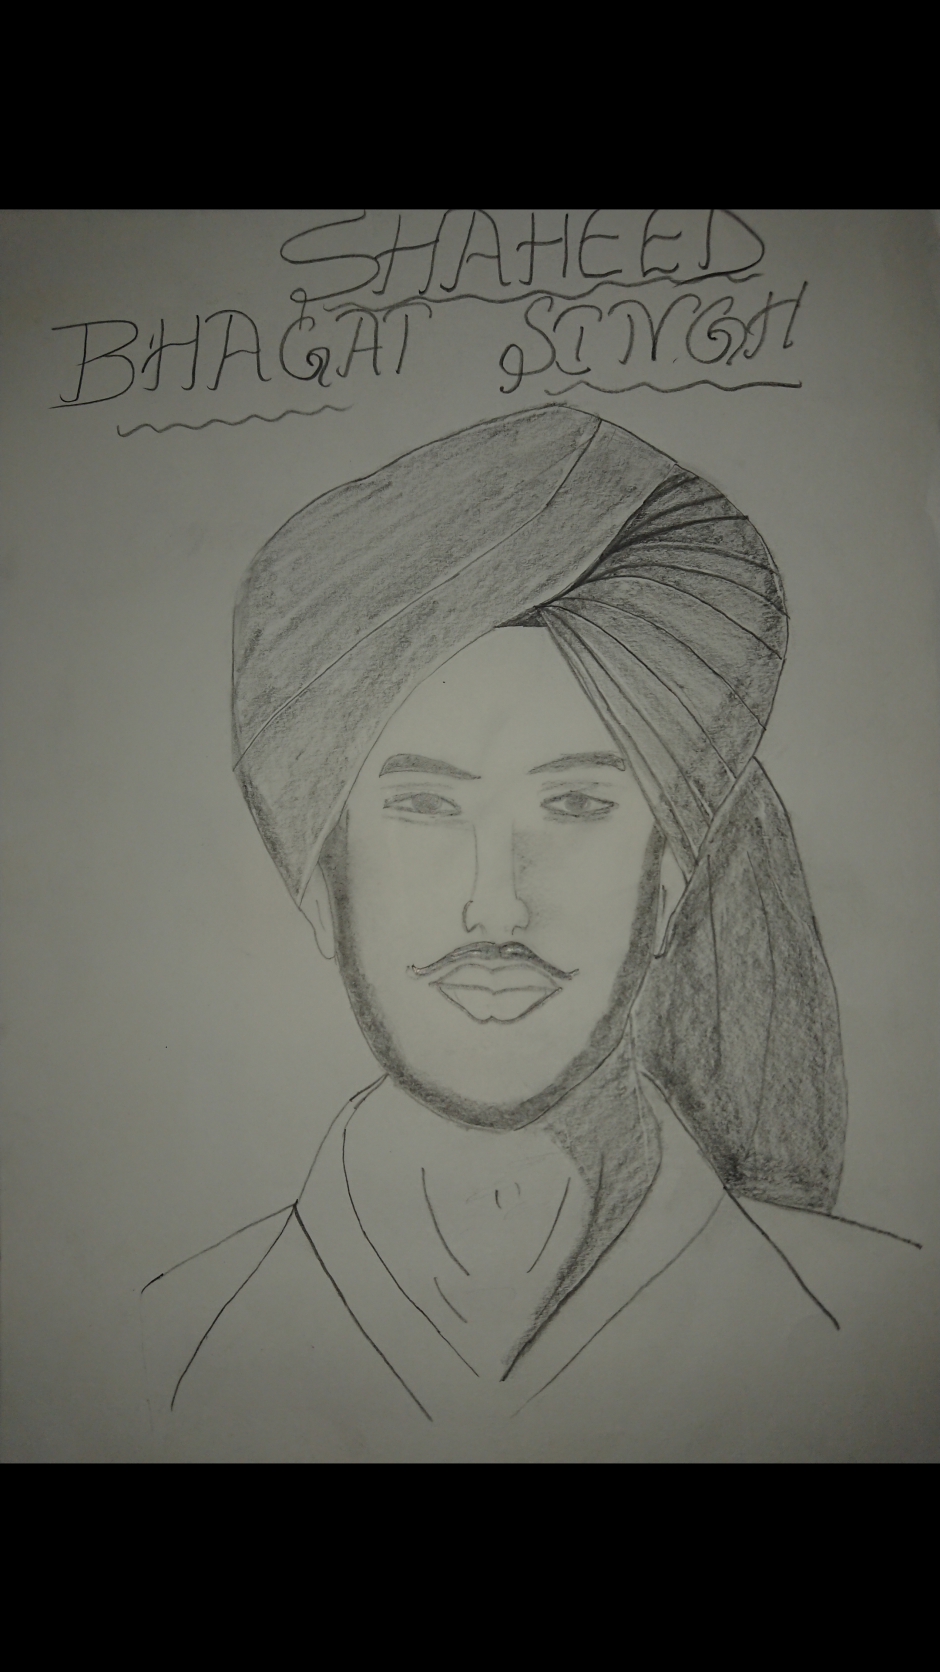 Shaheed Bhagat Singh  artimist